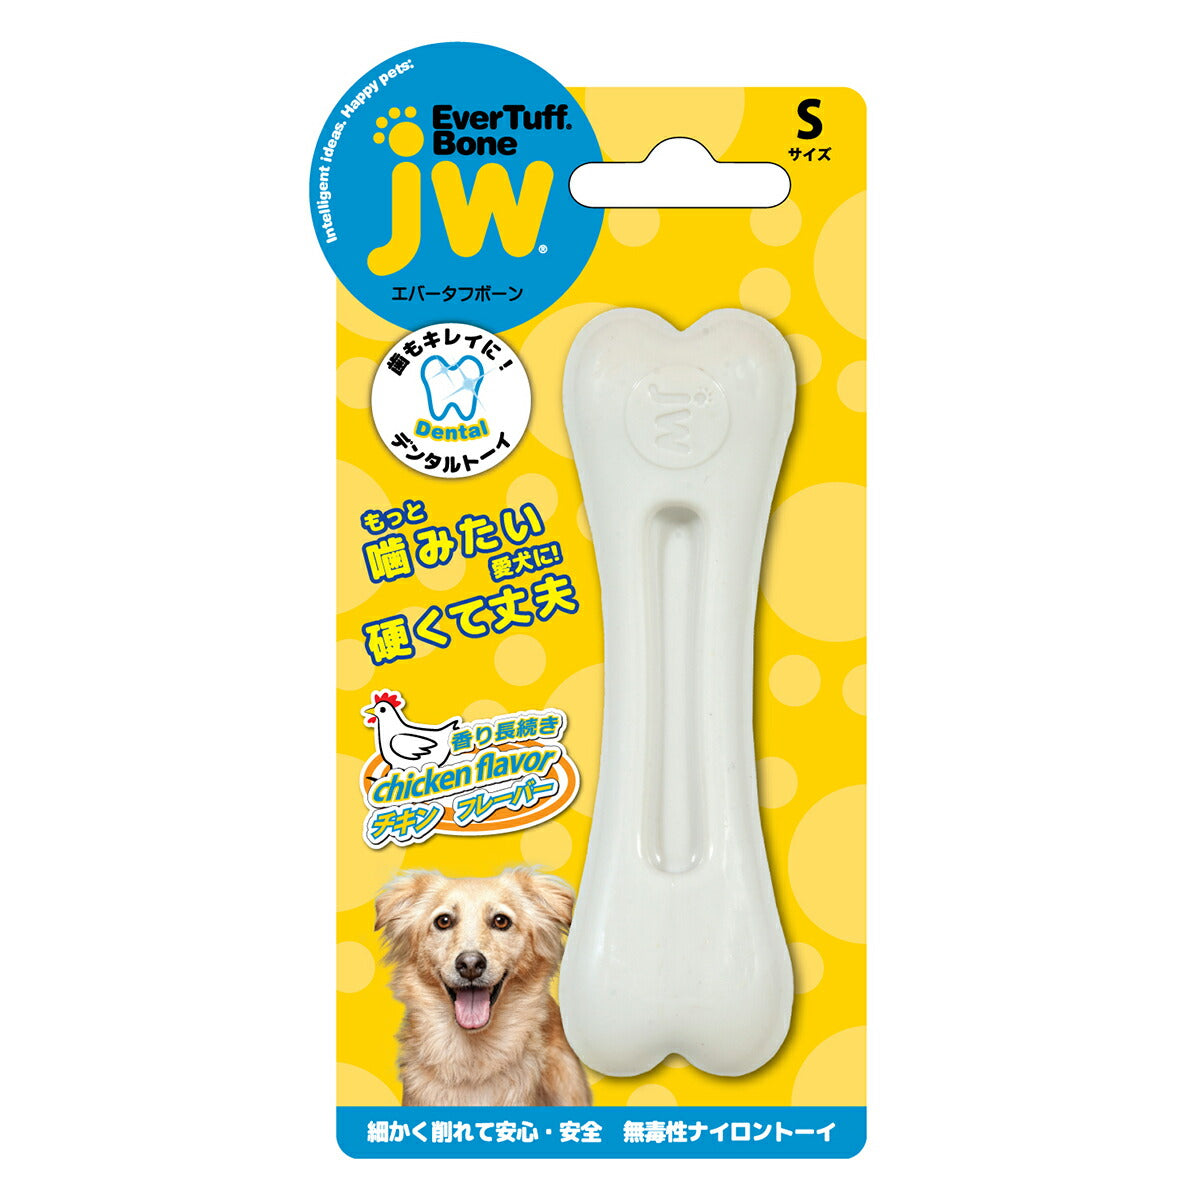 JWペット エバータフボーン S 犬 おもちゃ 骨型 噛む ストレス解消 咥えやすい チキンフレーバー 小型犬